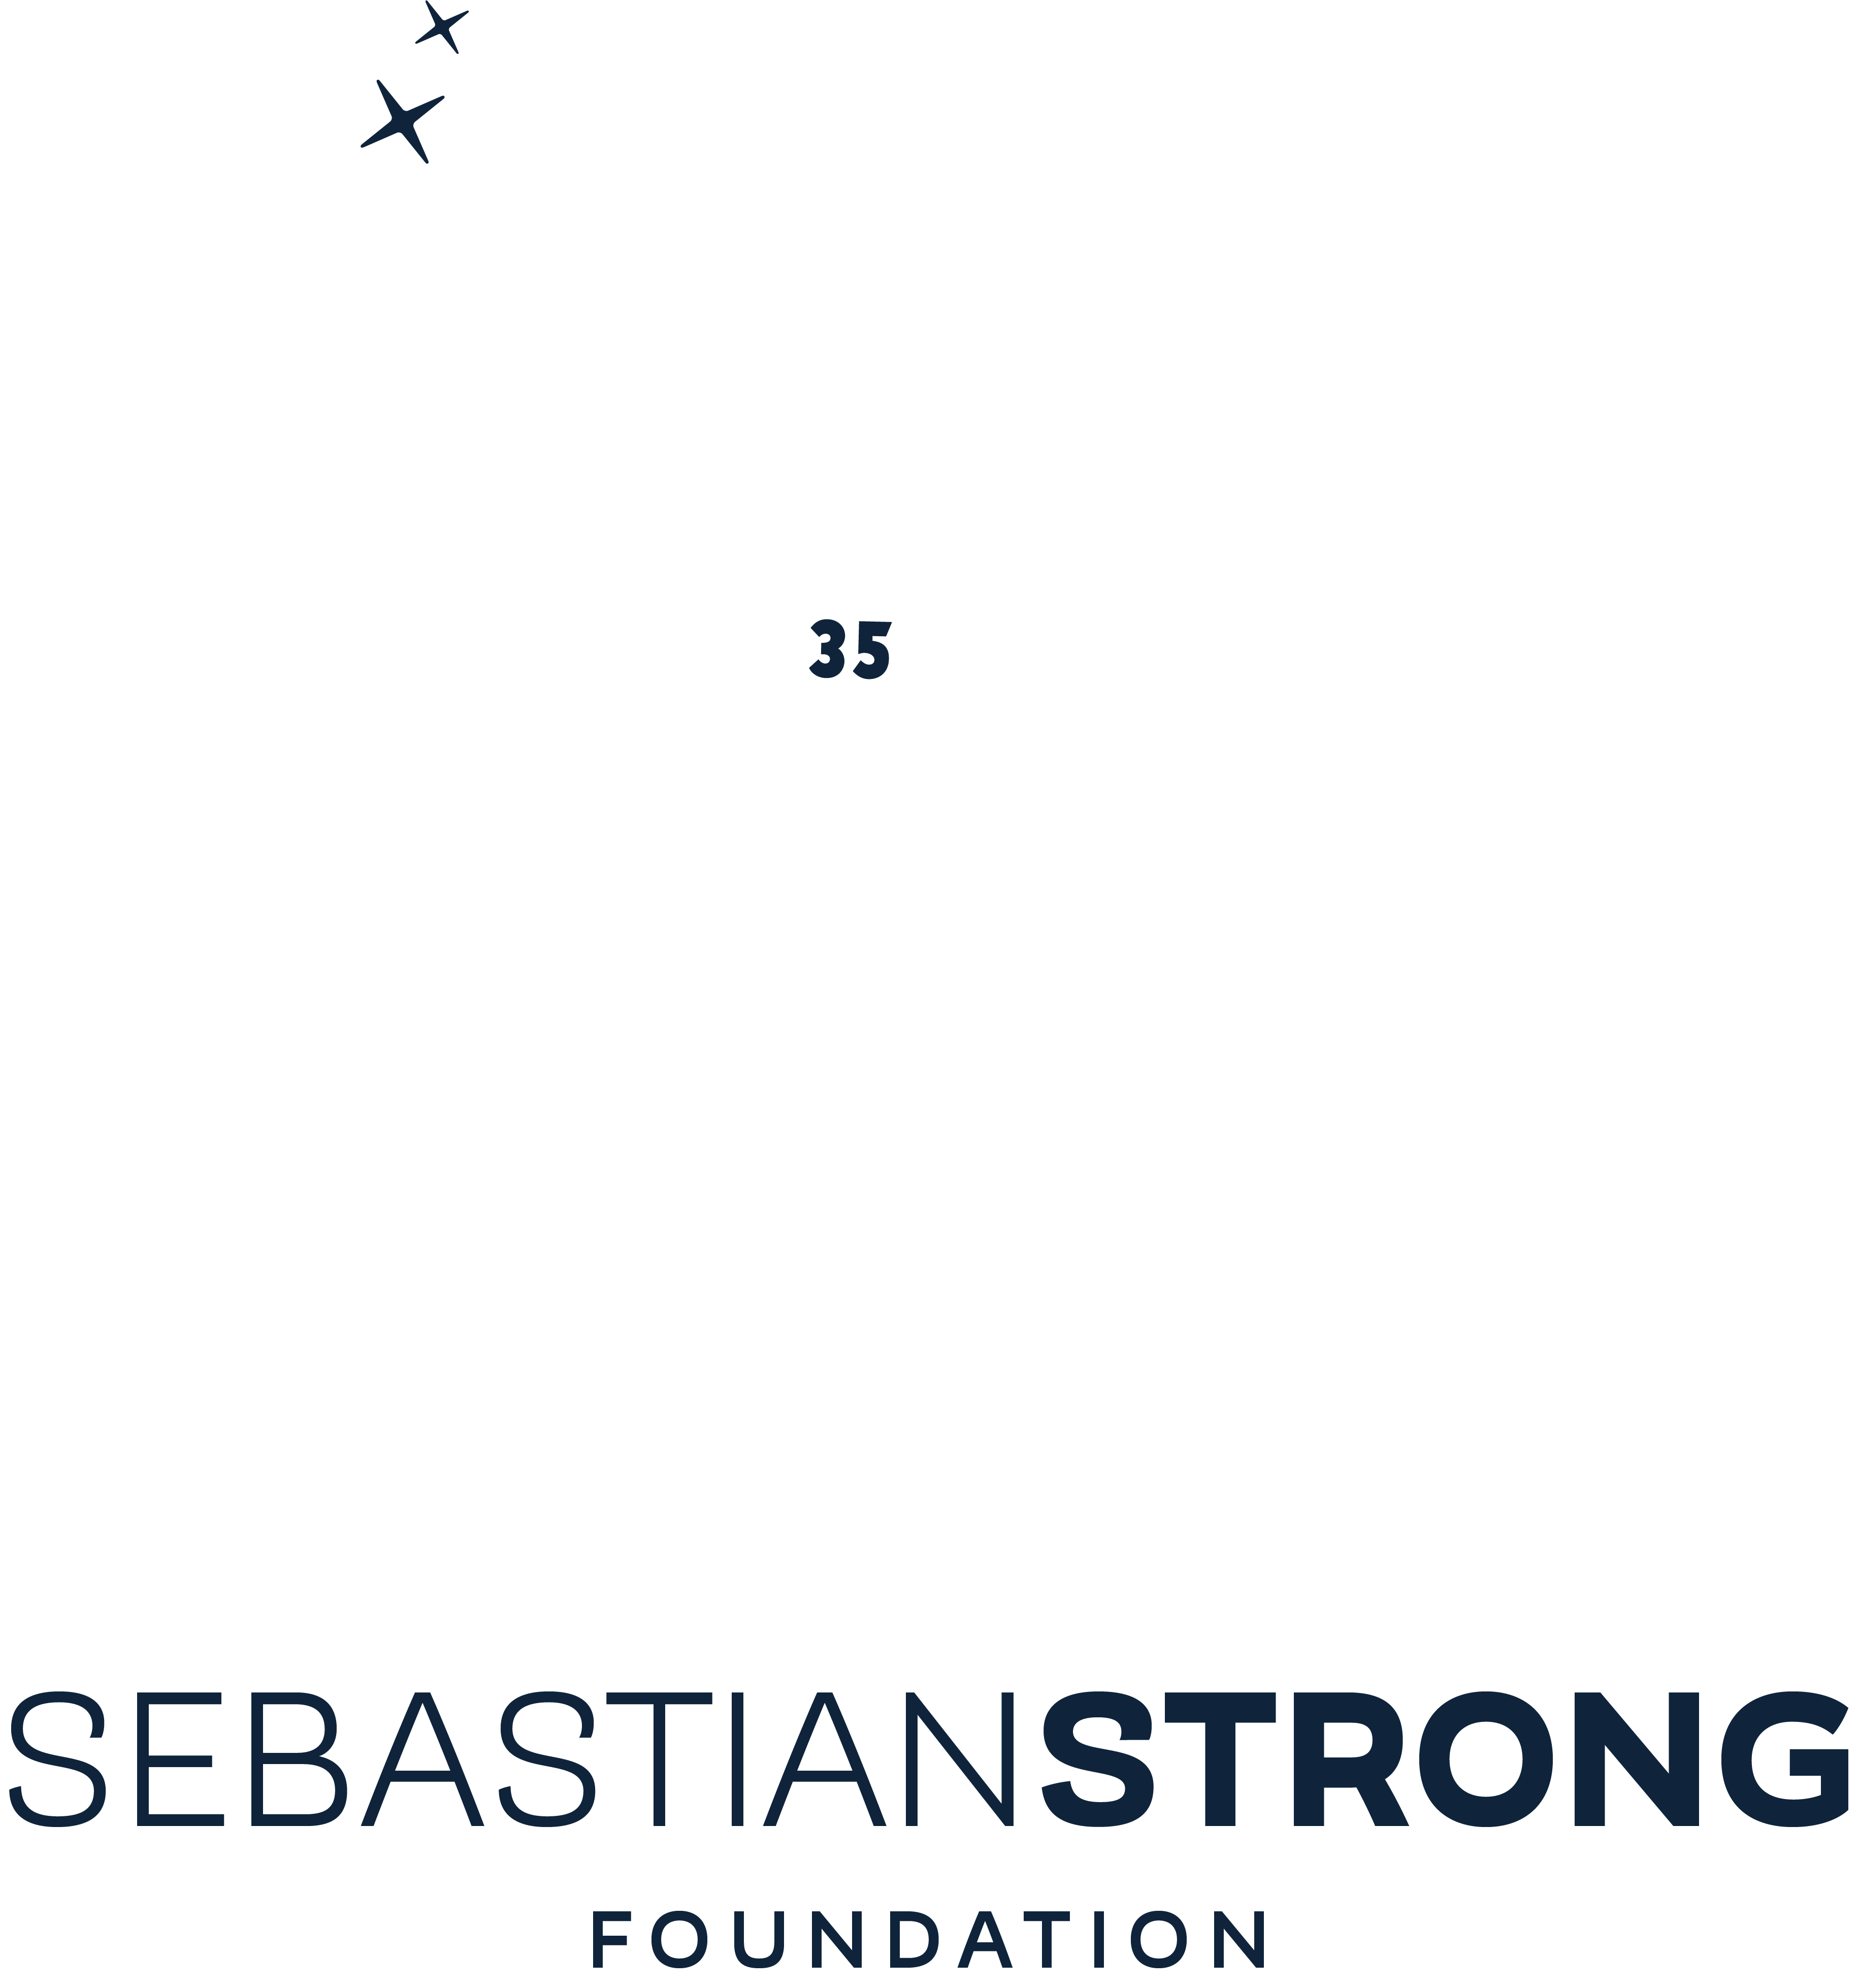 SebastianStrong Foundation, Inc